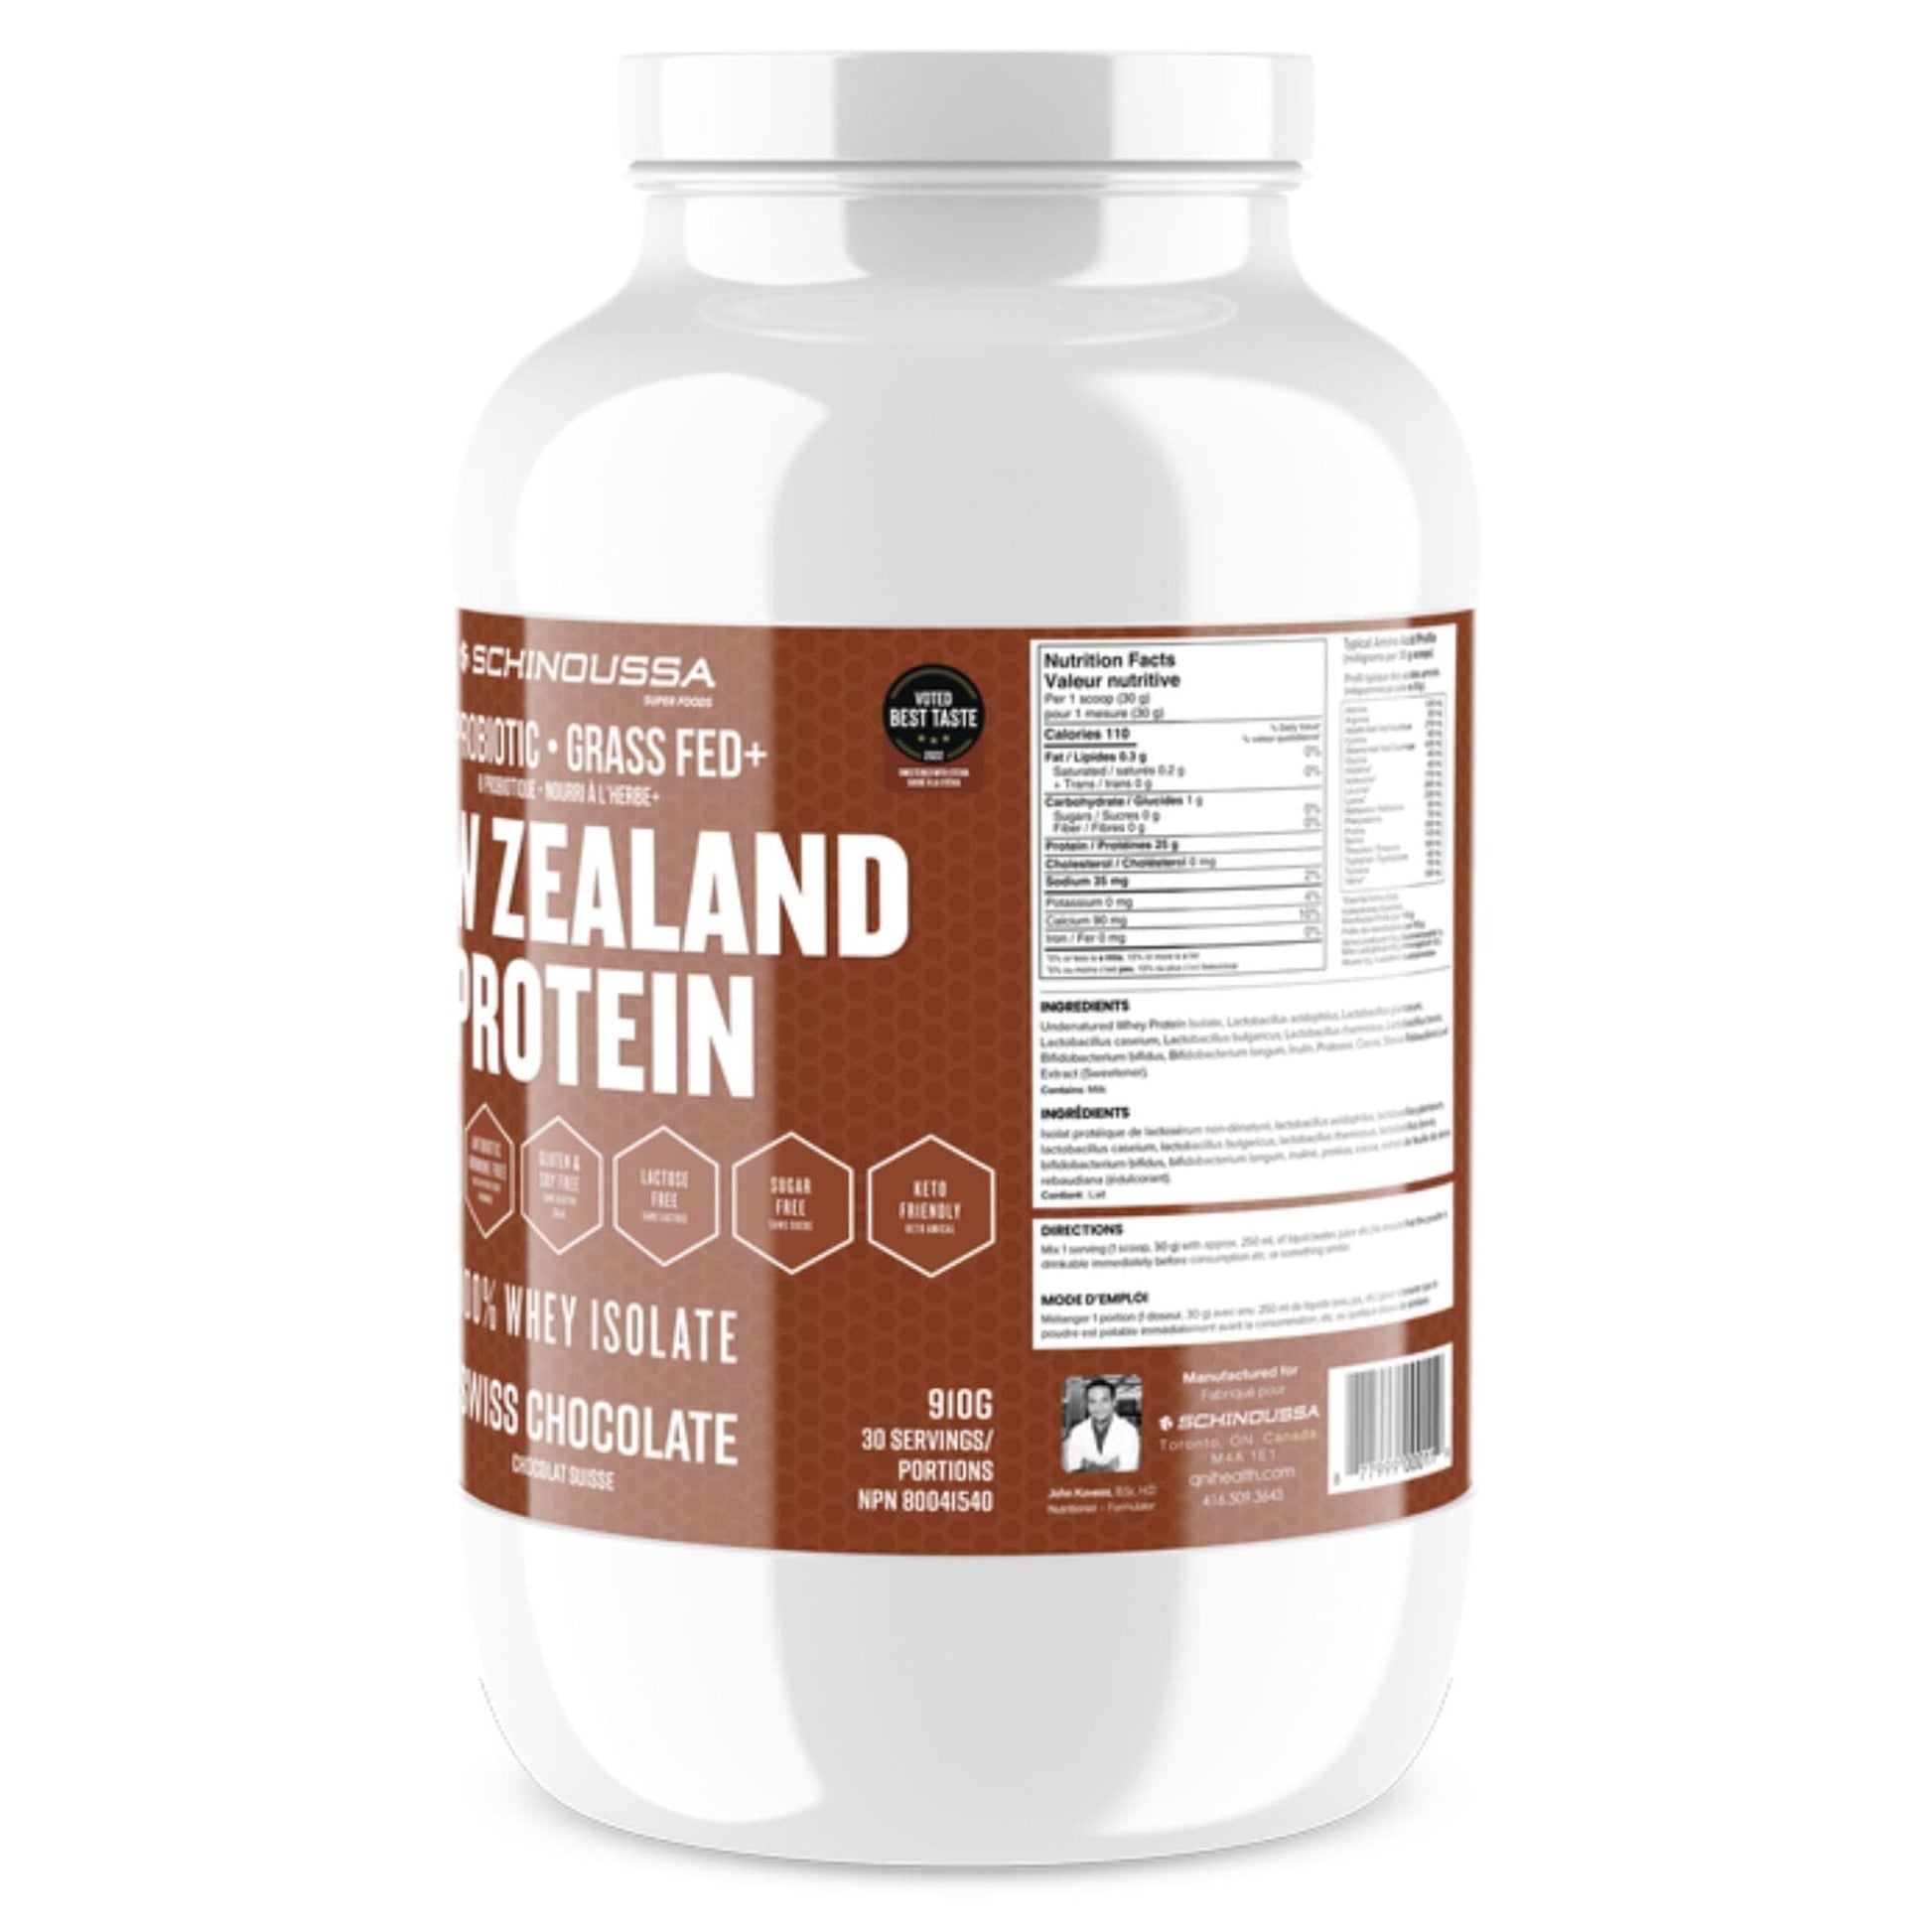 Swiss Chocolate | Schinoussa New Zealand Protein 8 Priobiotic 100% Whey Isolate // Chocolate flavour